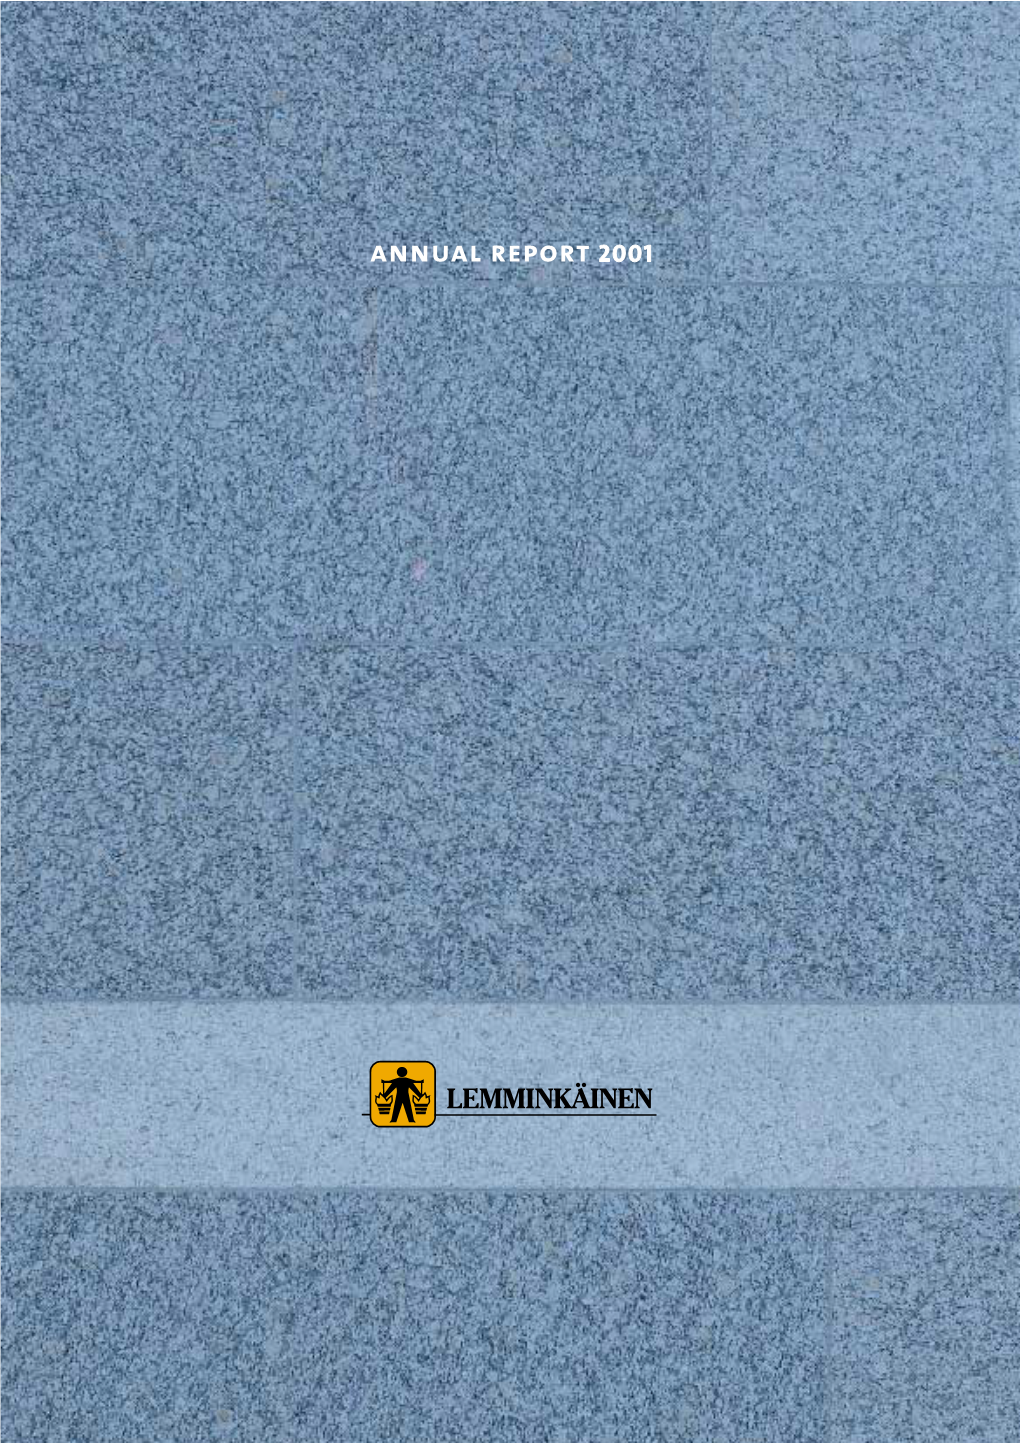 Lemminkäinen Annual Report 2001